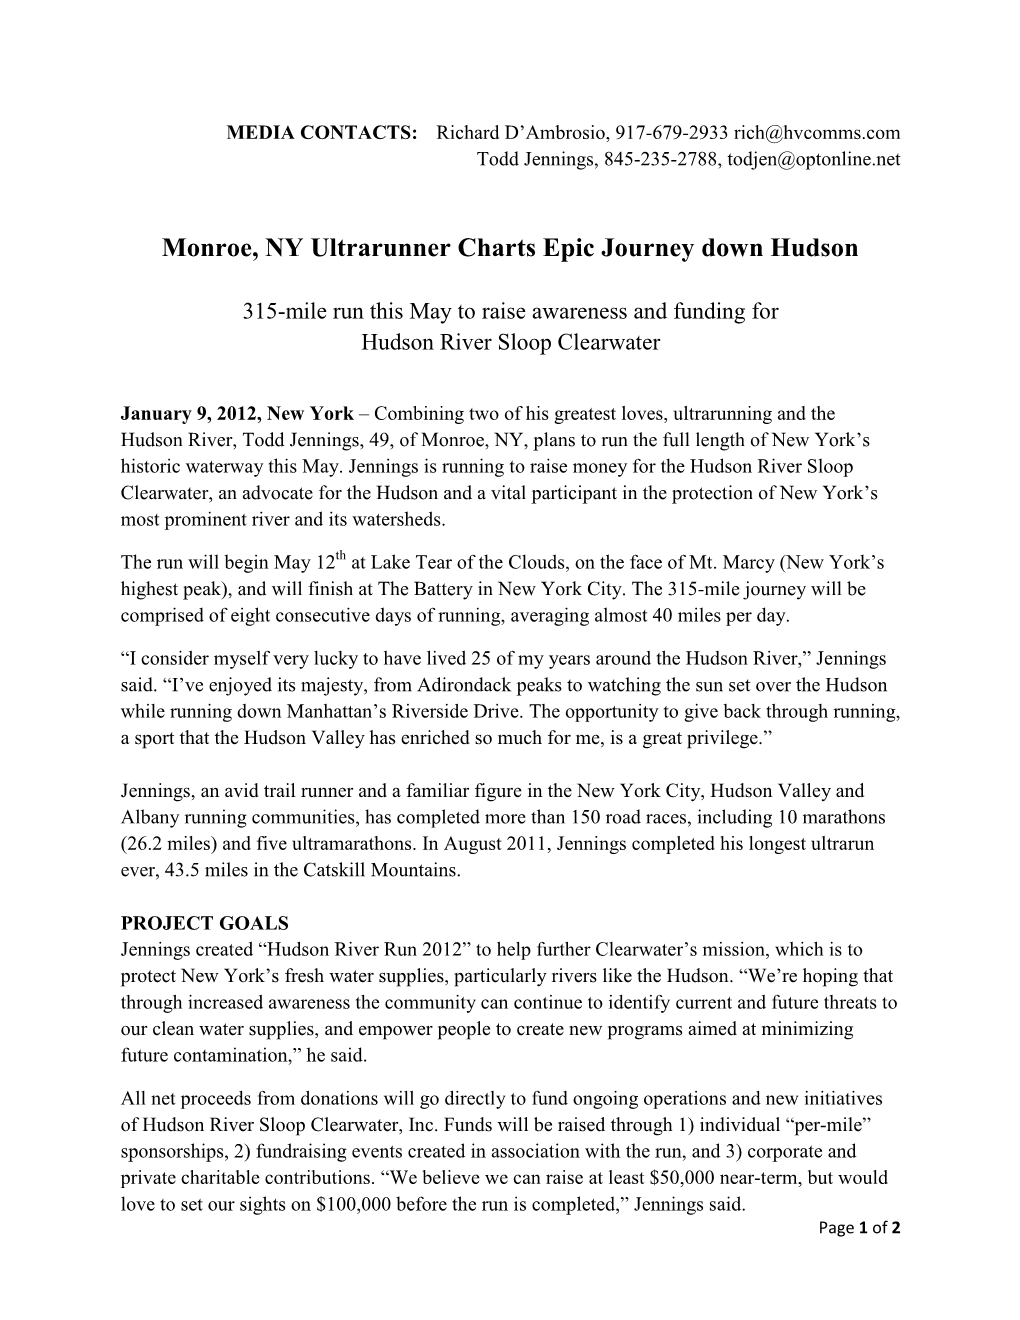 Monroe, NY Ultrarunner Charts Epic Journey Down Hudson